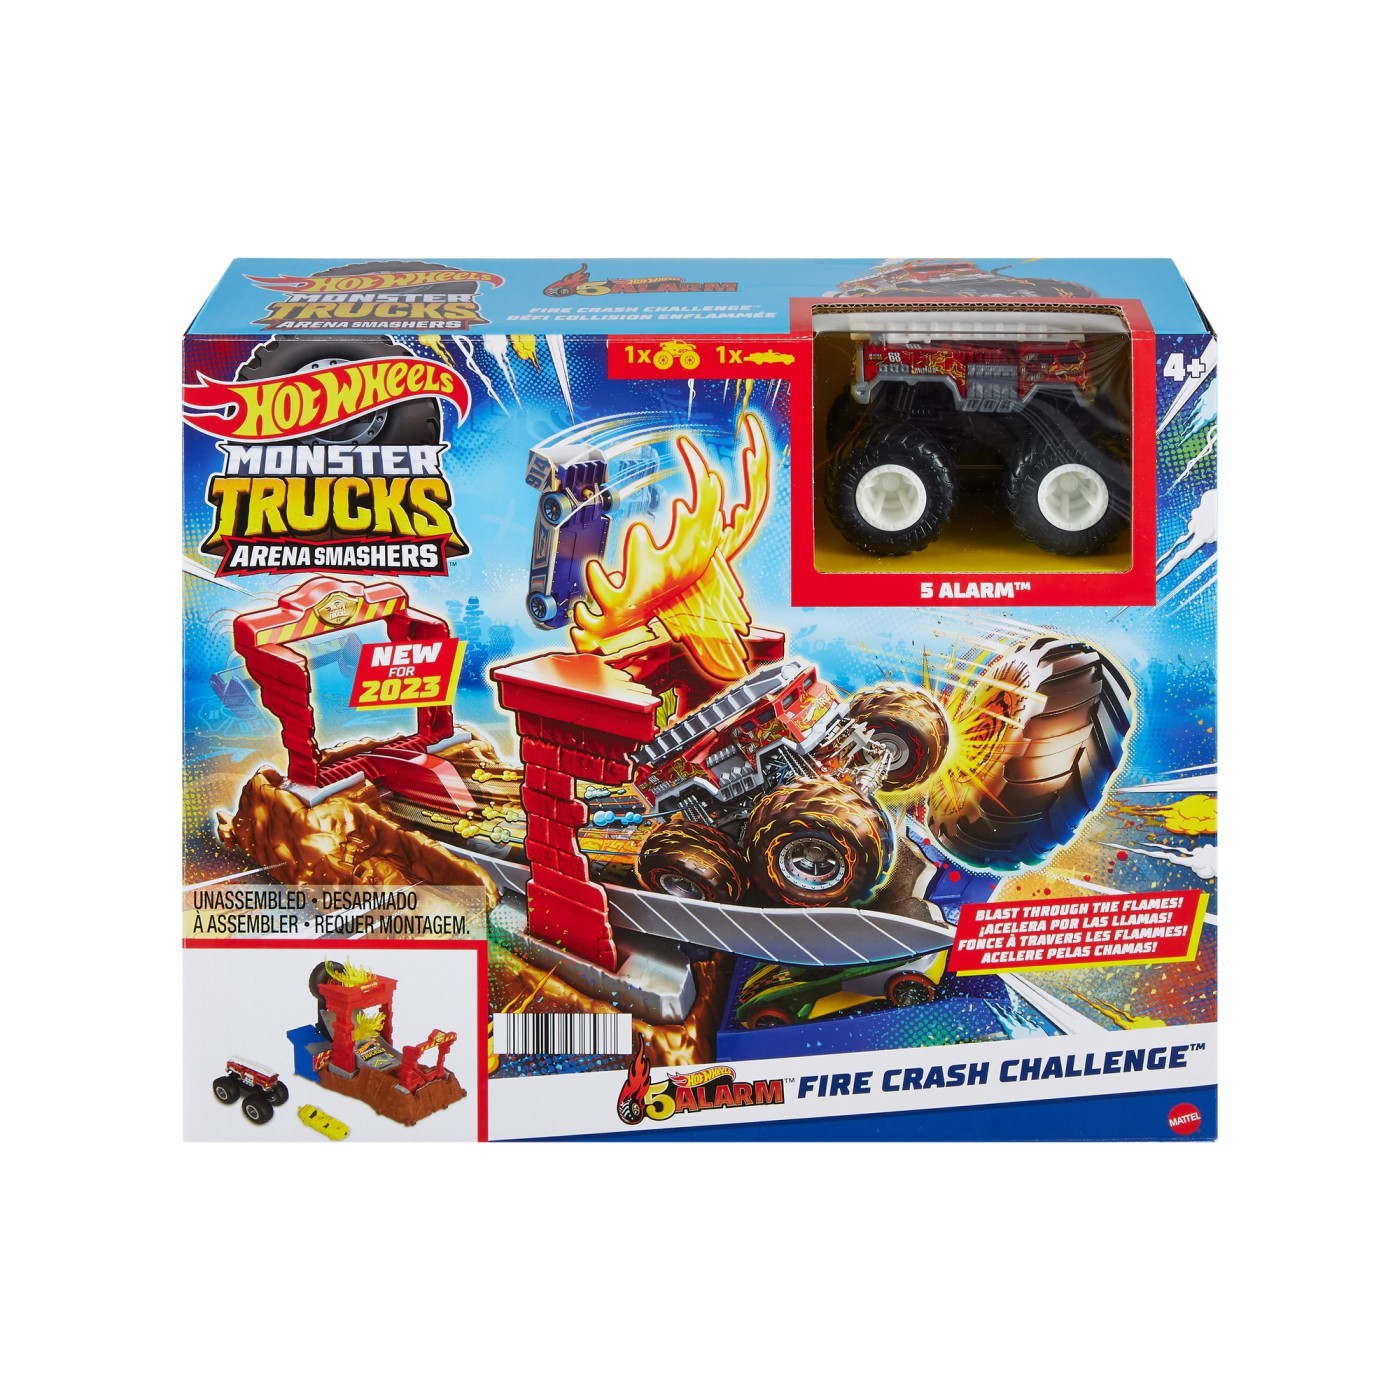 Joc - Hot Wheels Monster Truck Entry Challenge Arena Smashers, Fire Crash | Mattel